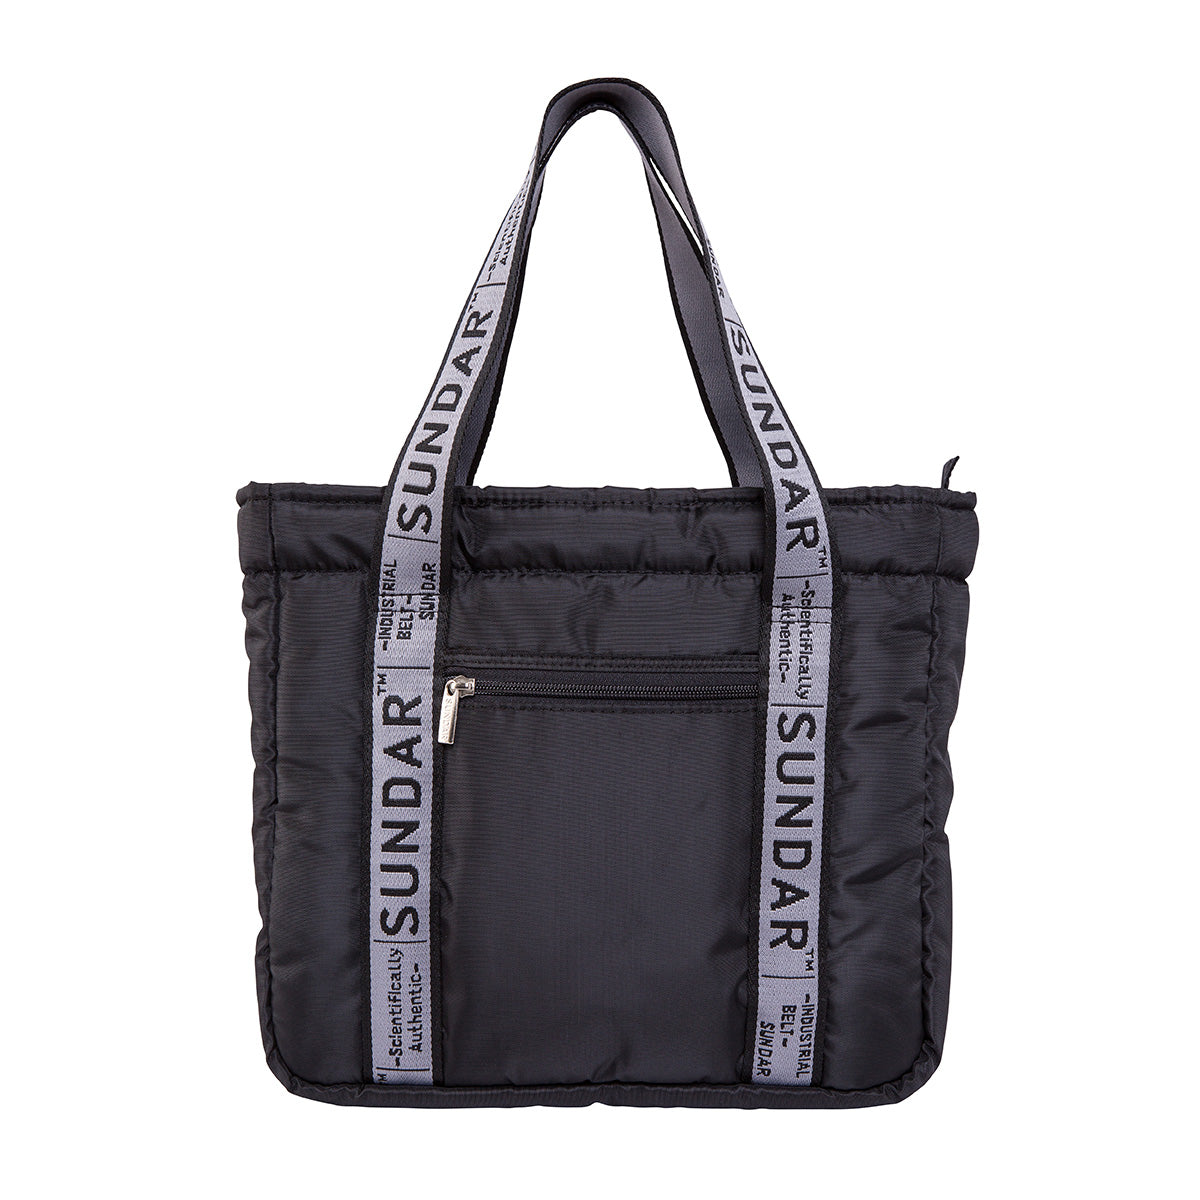 Básica Black,  Shoulder Bag 2020 with Black and Gray Ribbon Strap